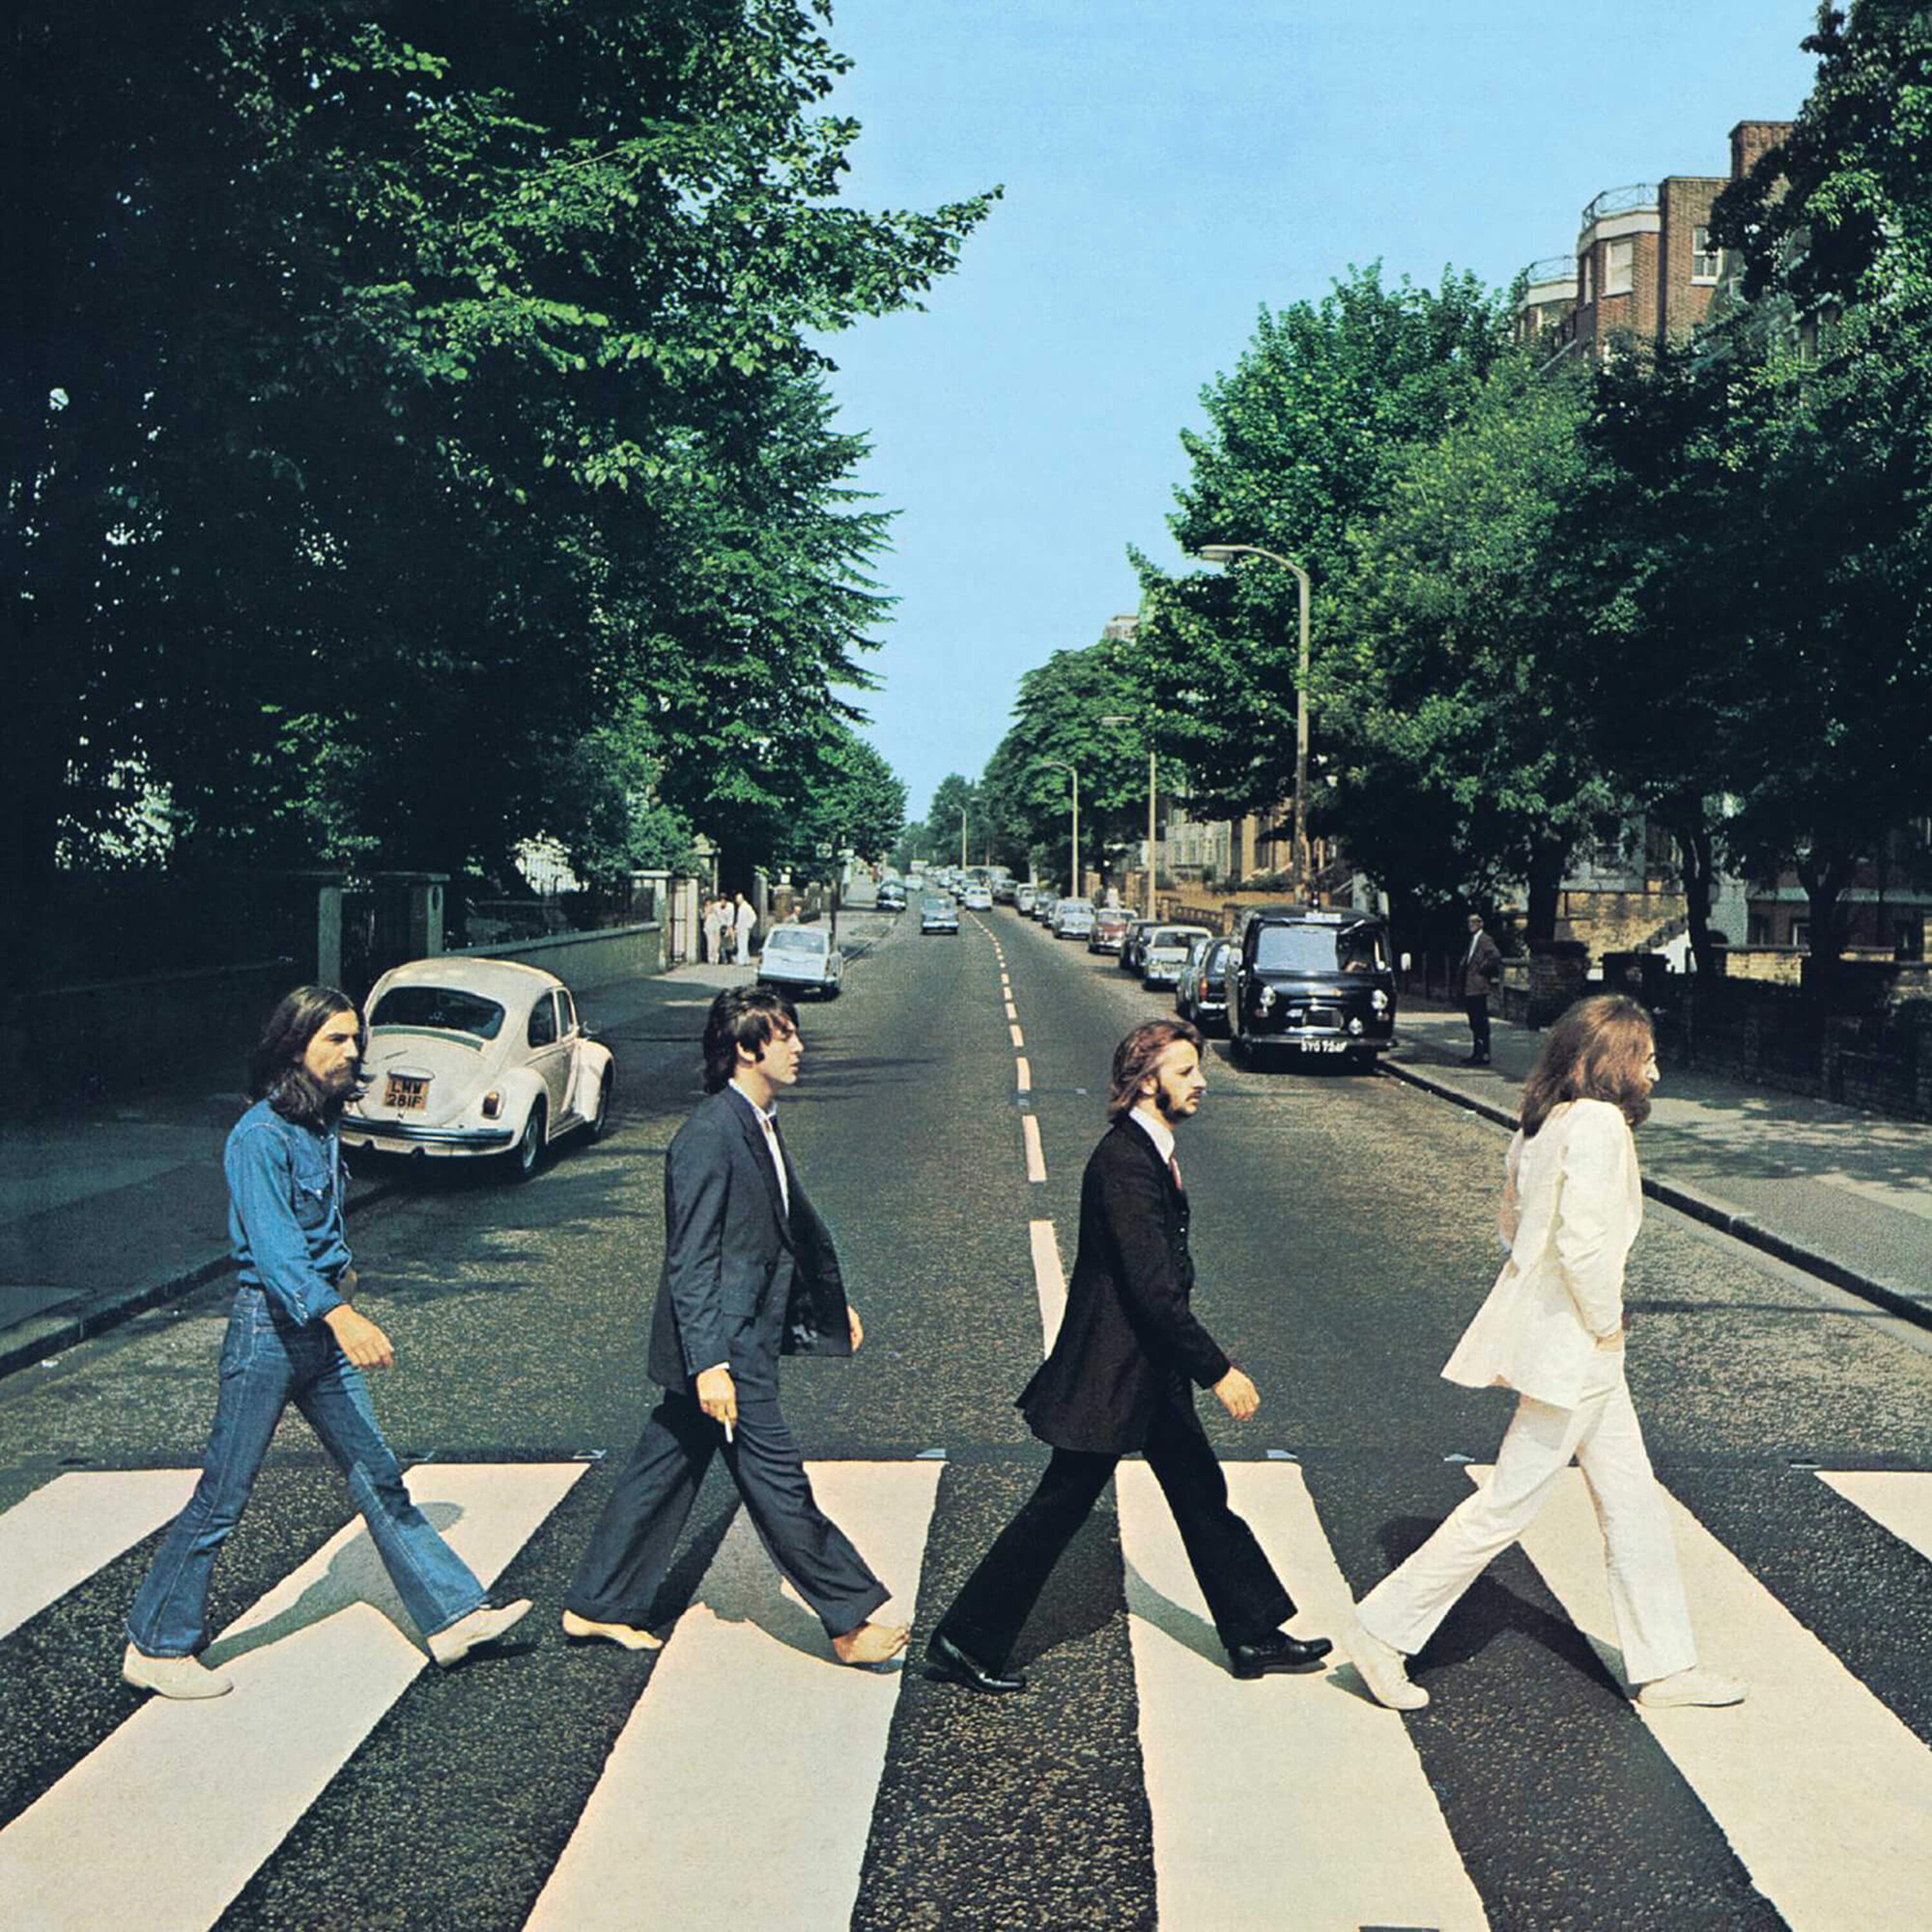 https://images.bravado.de/prod/product-assets/product-asset-data/beatles-the/the-beatles-international-1/products/130643/web/291978/image-thumb__291978__3000x3000_original/The-Beatles-Abbey-Road-Anniversary-Edition-Ltd-Super-Deluxe-Box-CD-130643-291978.jpg